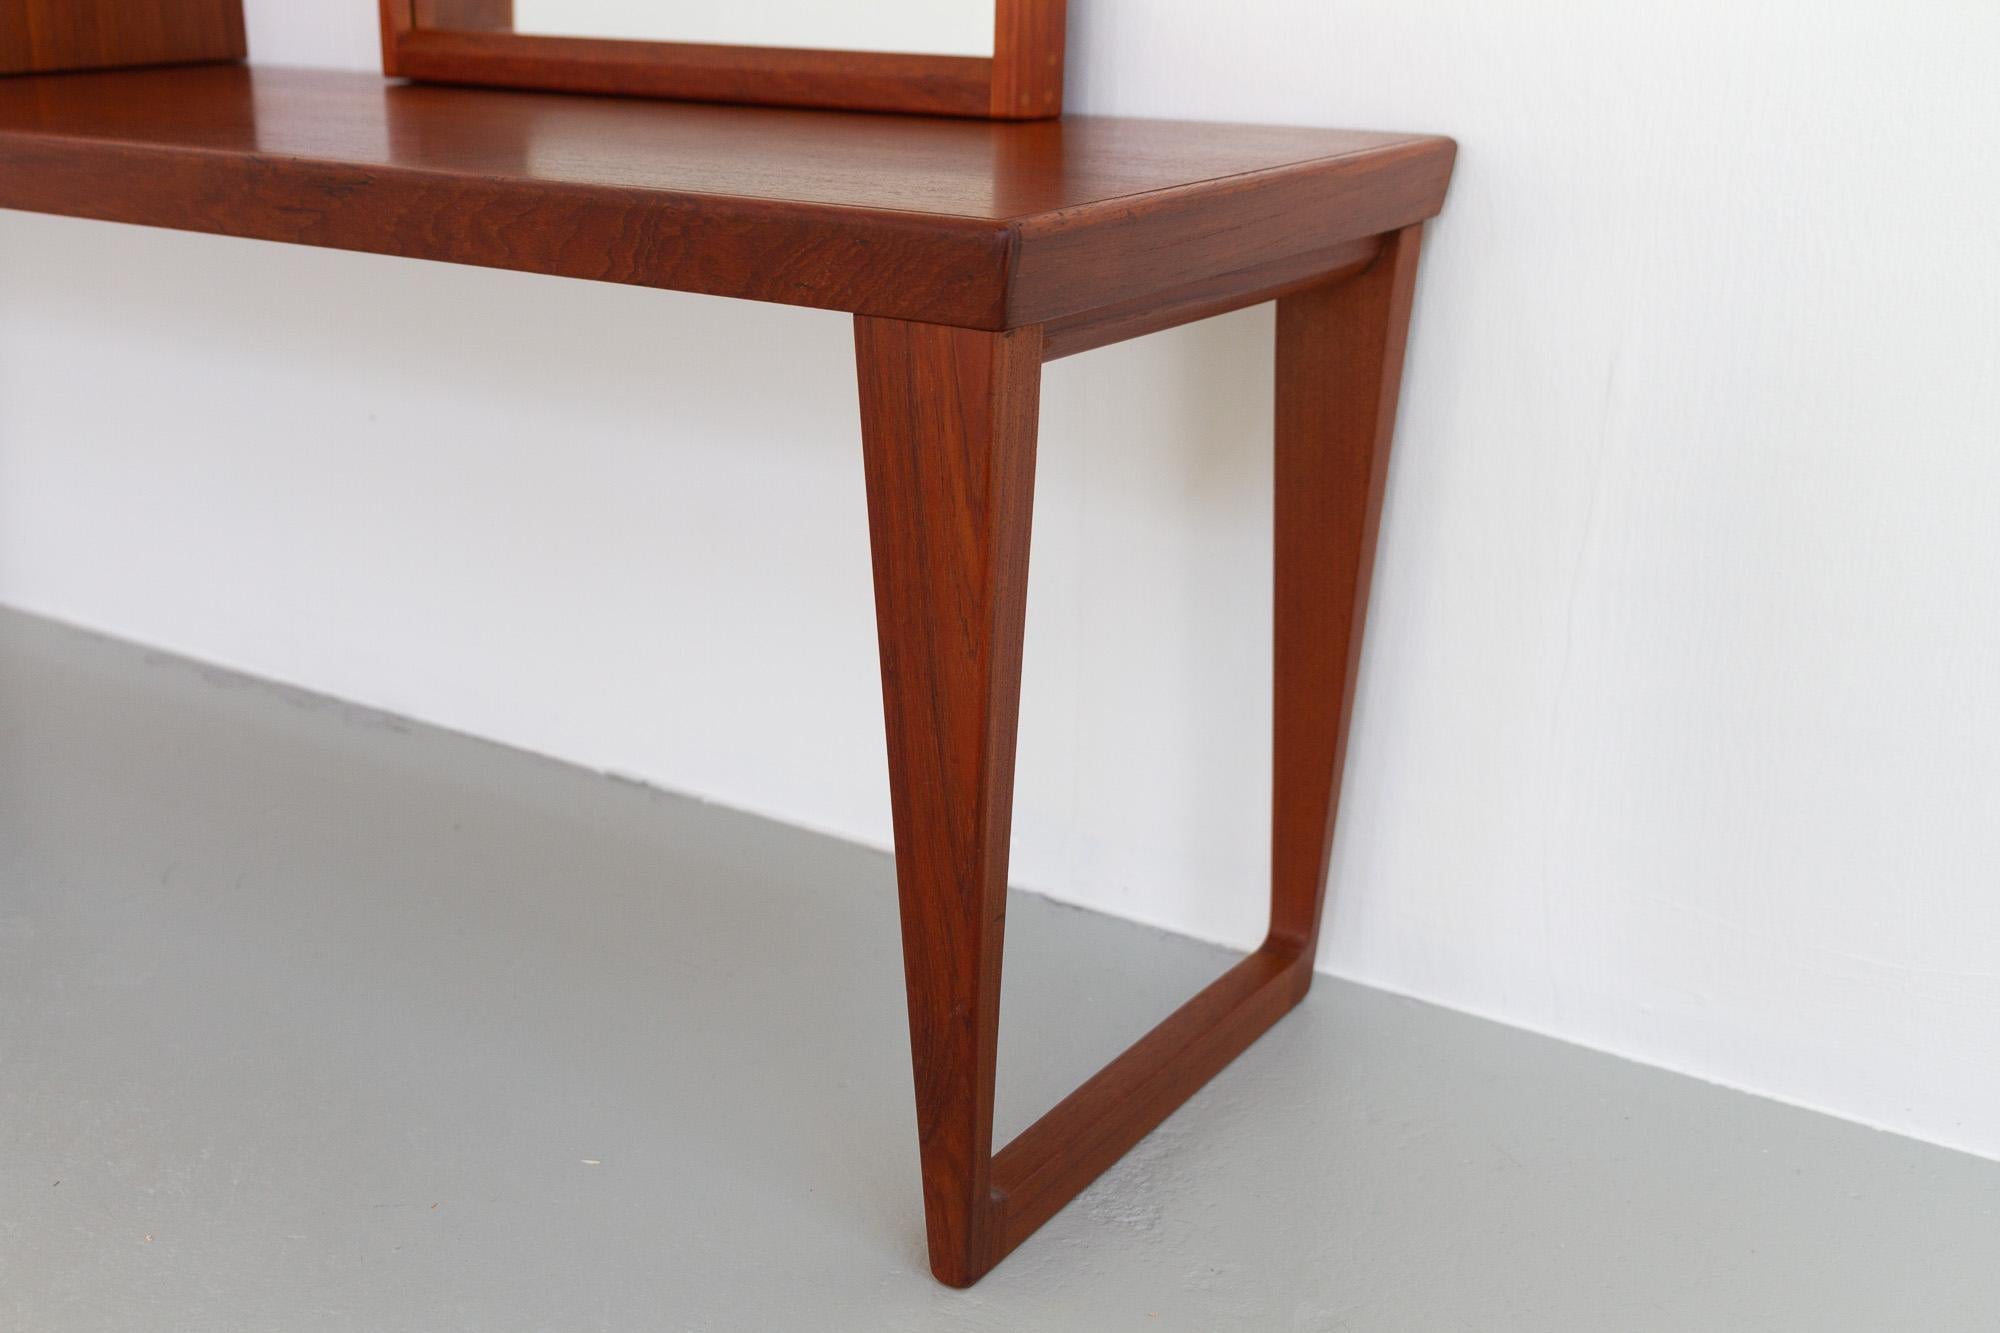 Mid-20th Century Danish Modern Teak Bench, Mirror and Drawers by Kai Kristiansen 1960s For Sale